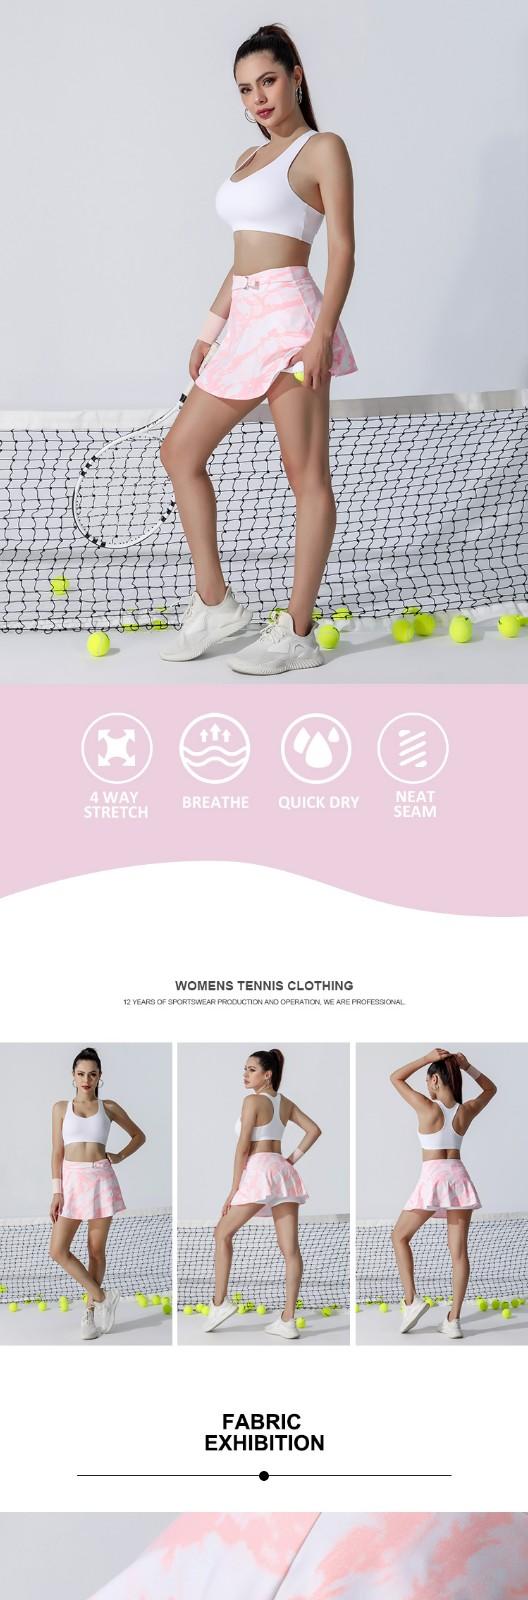 INGOR woman tennis shorts owner for girls